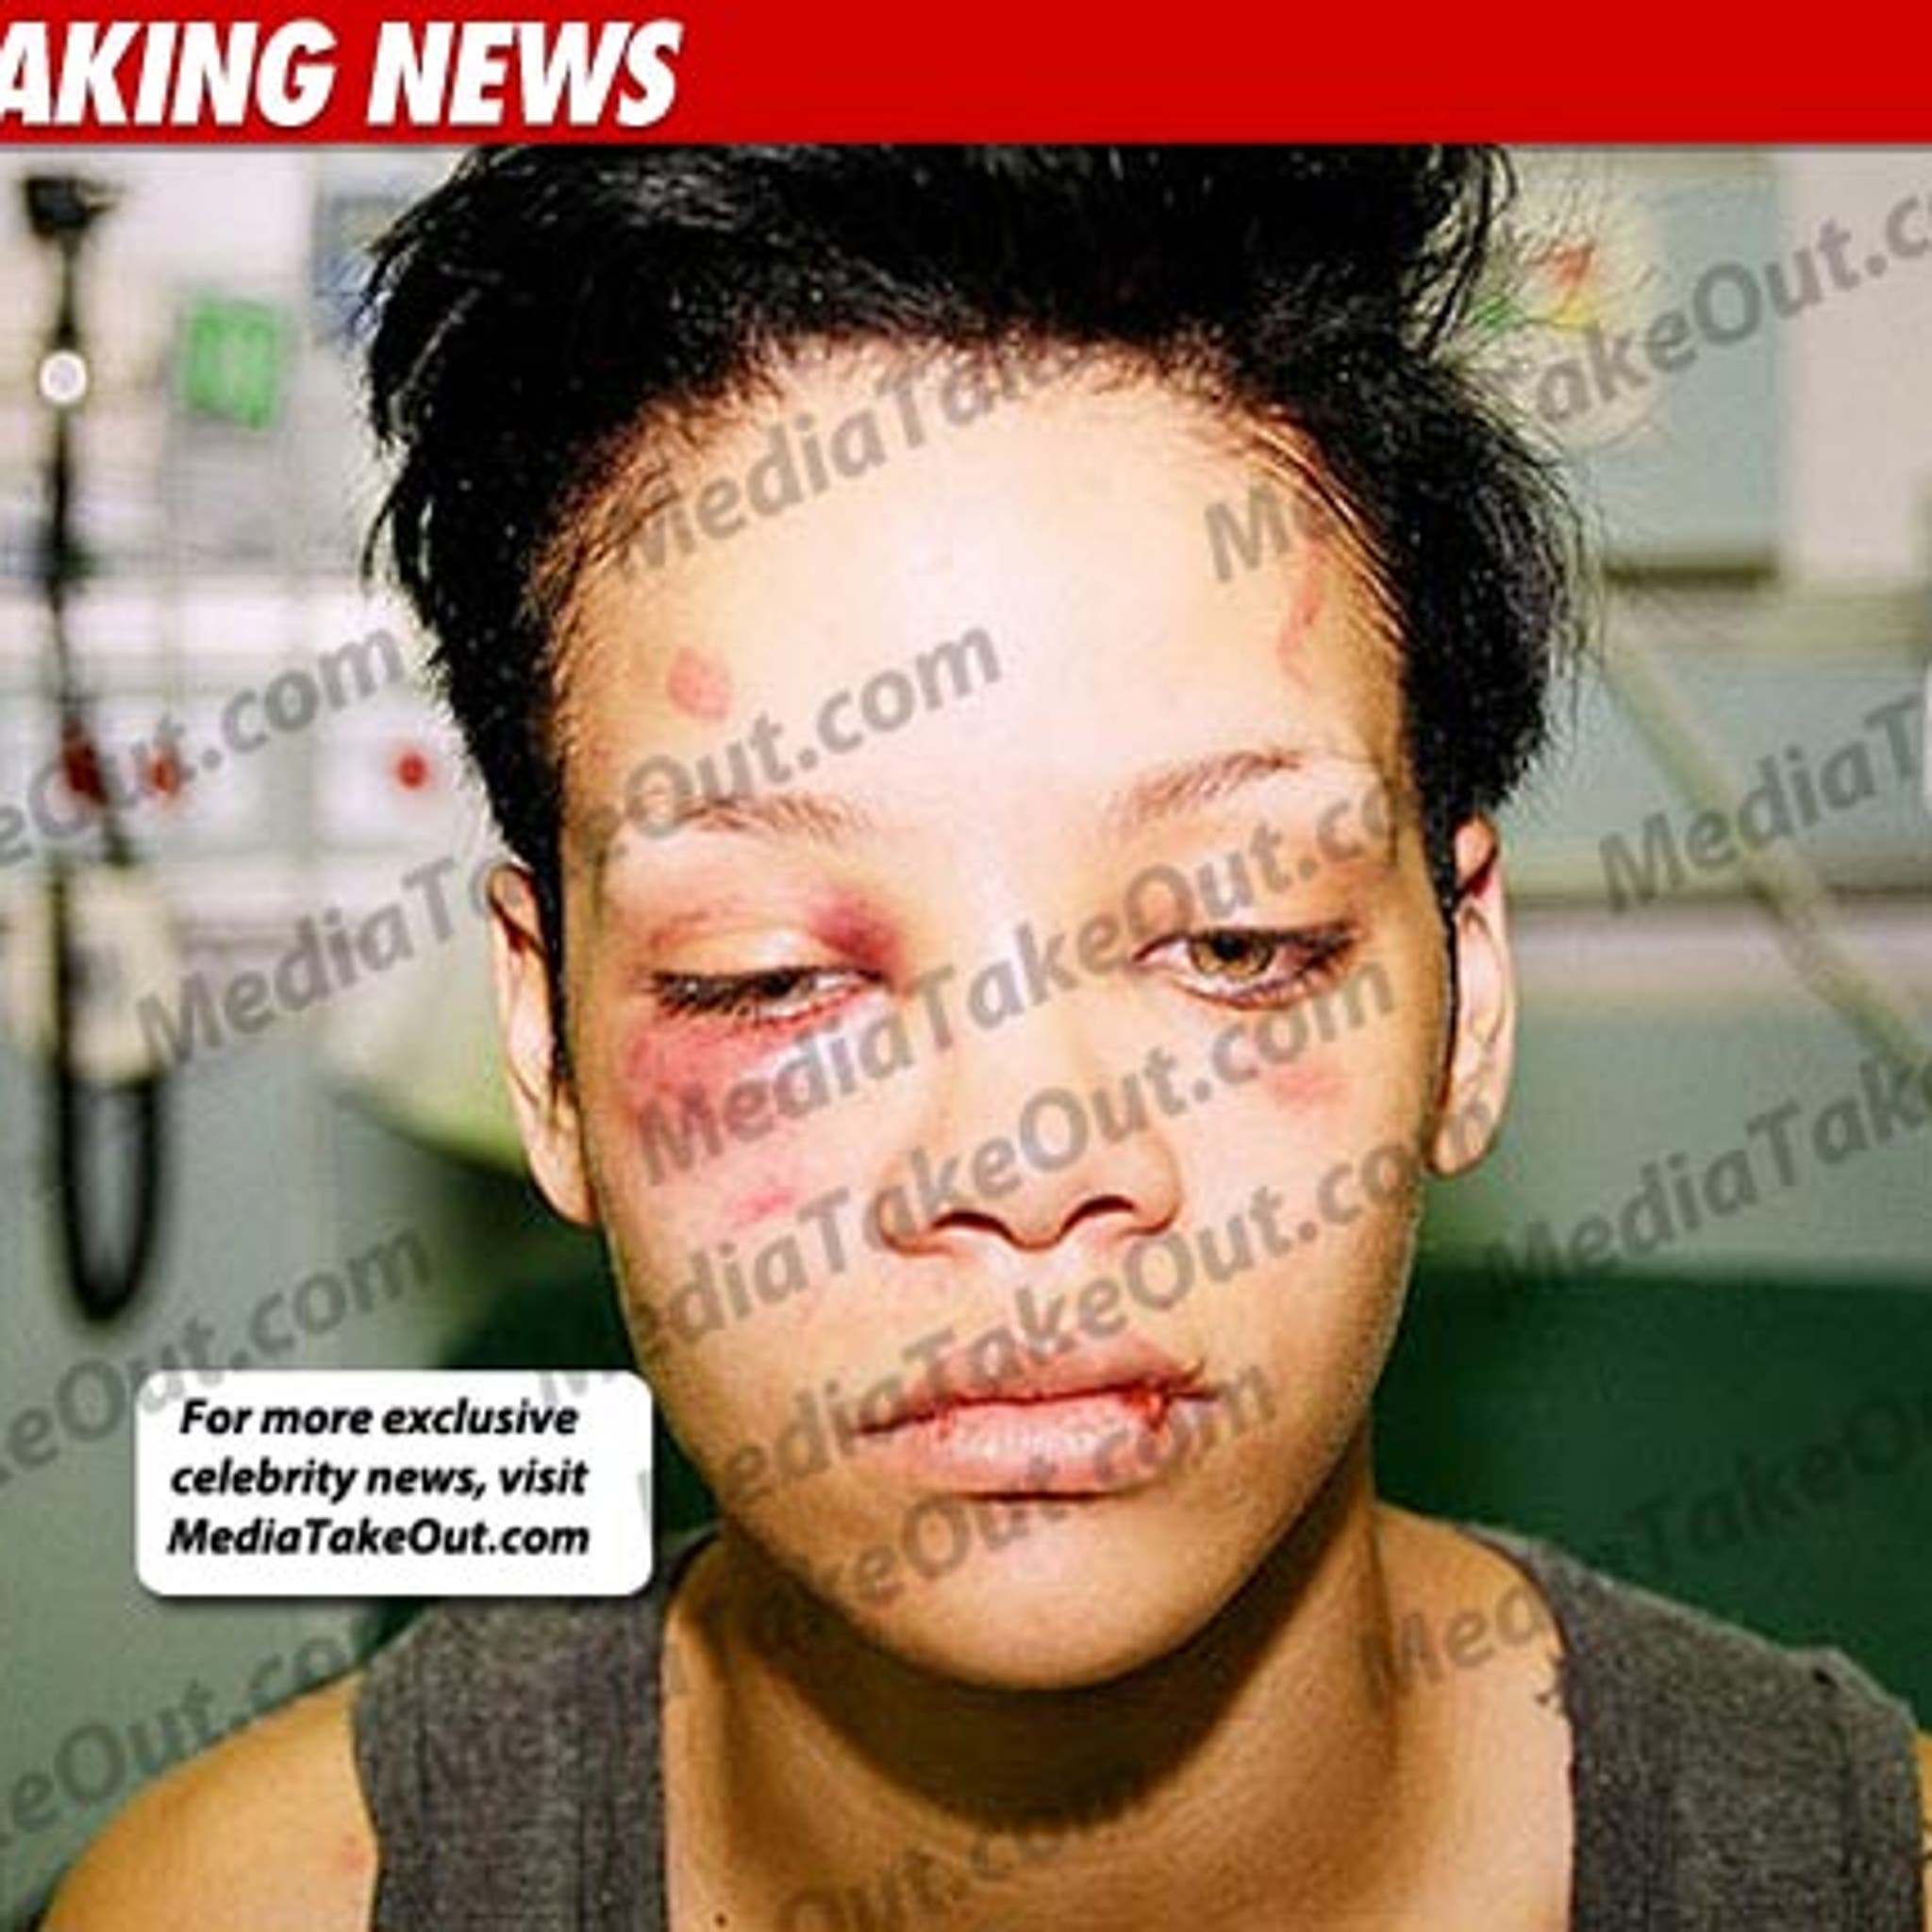 Pictures Of Rihannas Facial Injuries Telegraph